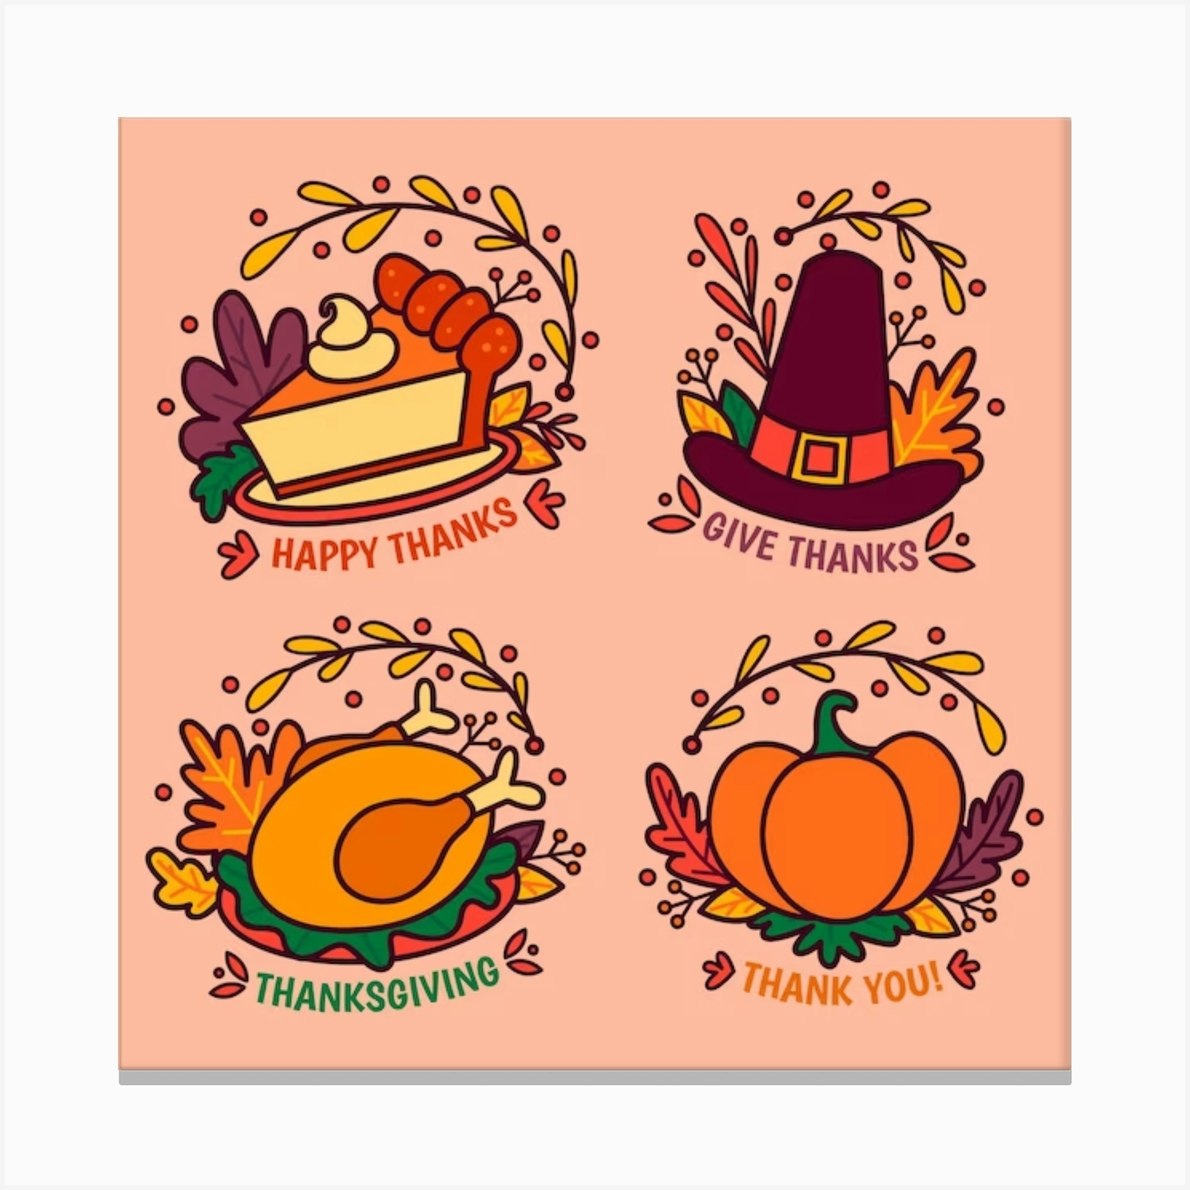 Happy Thanksgiving Day in 2023' Sticker